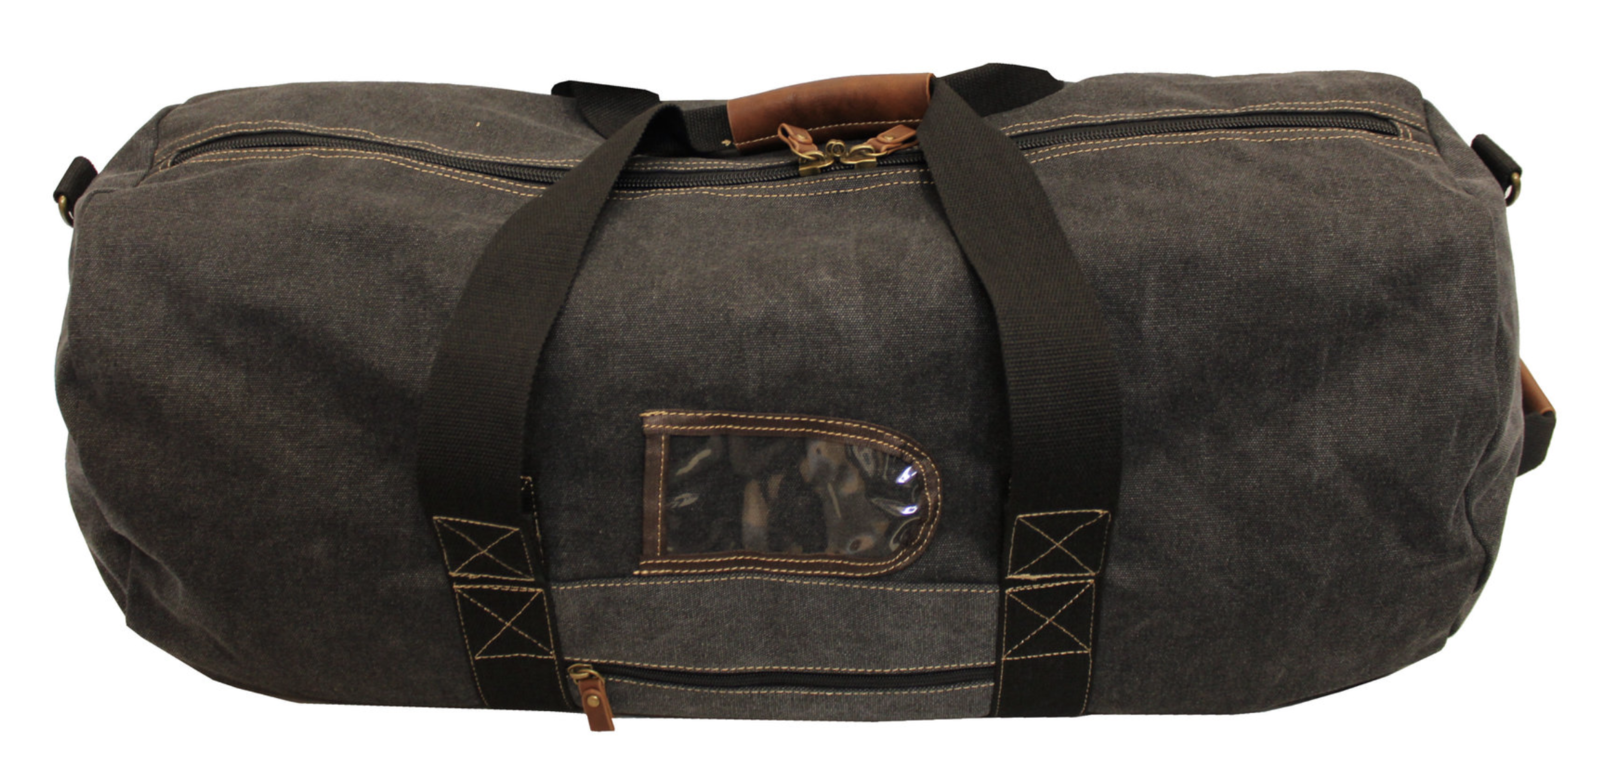 FIB 70cm Canvas Duffle Bag Travel Heavy Duty Large - Black | eBay